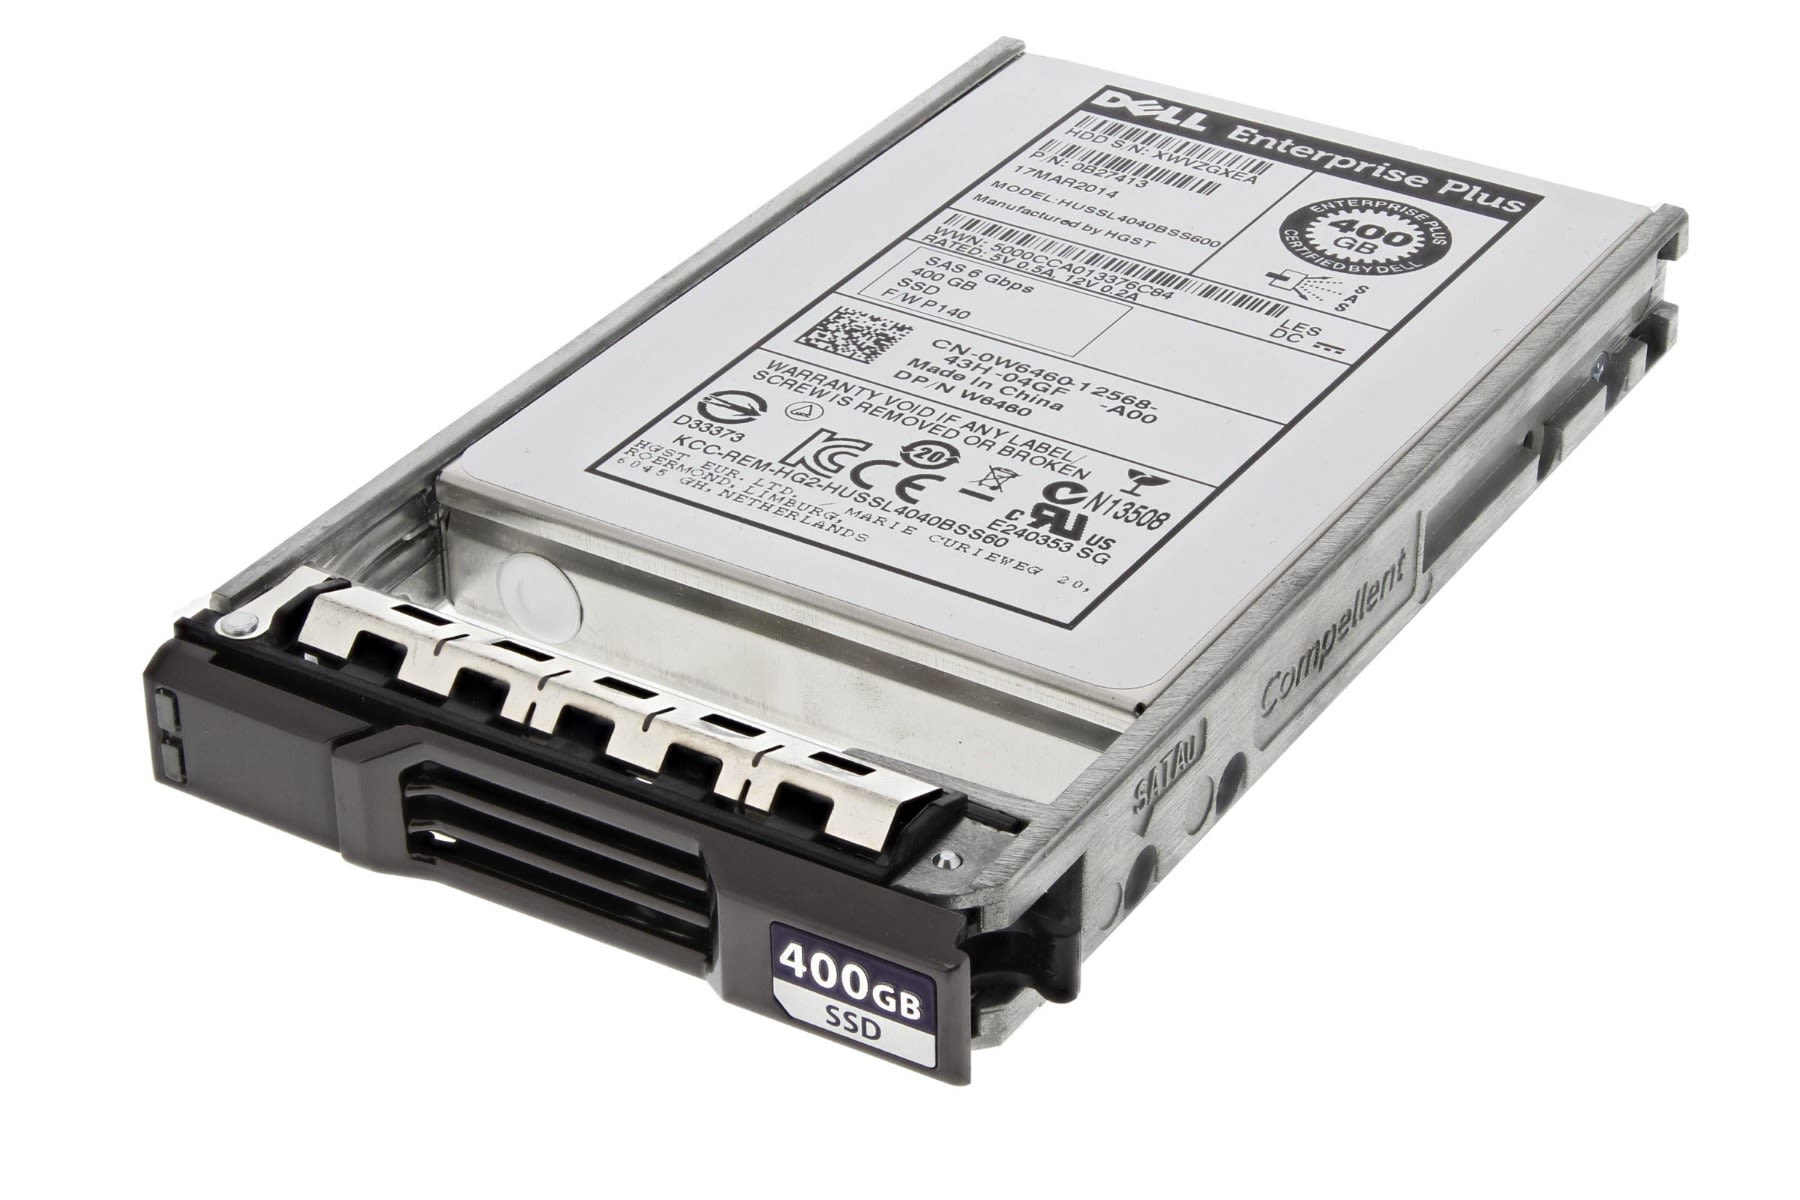 Compellent 400GB SSD SAS Hard Drive